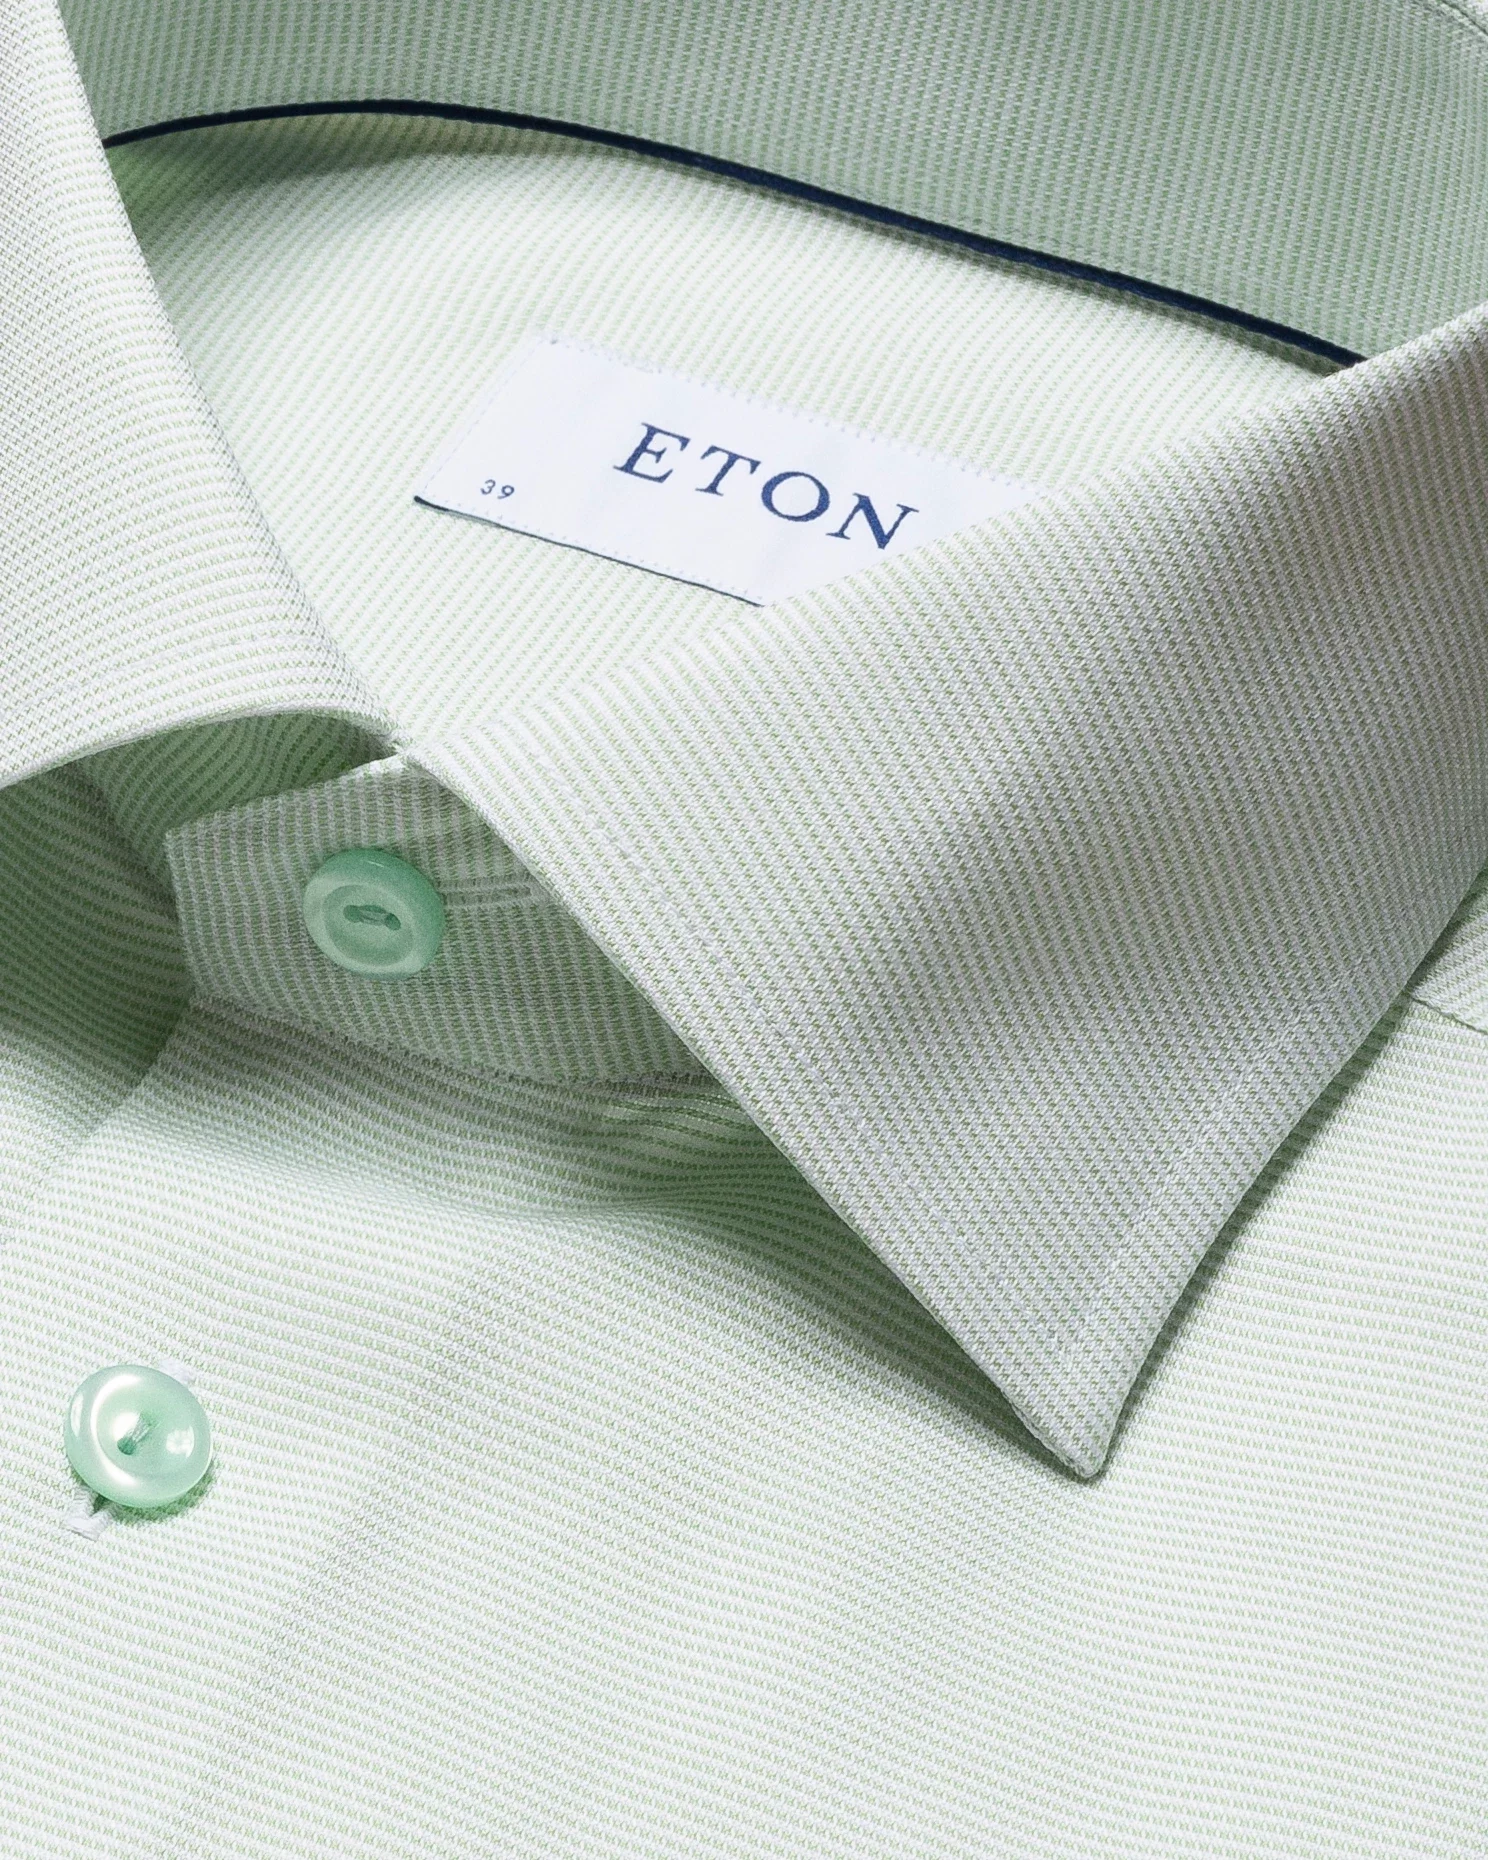 Eton - green twill shirt